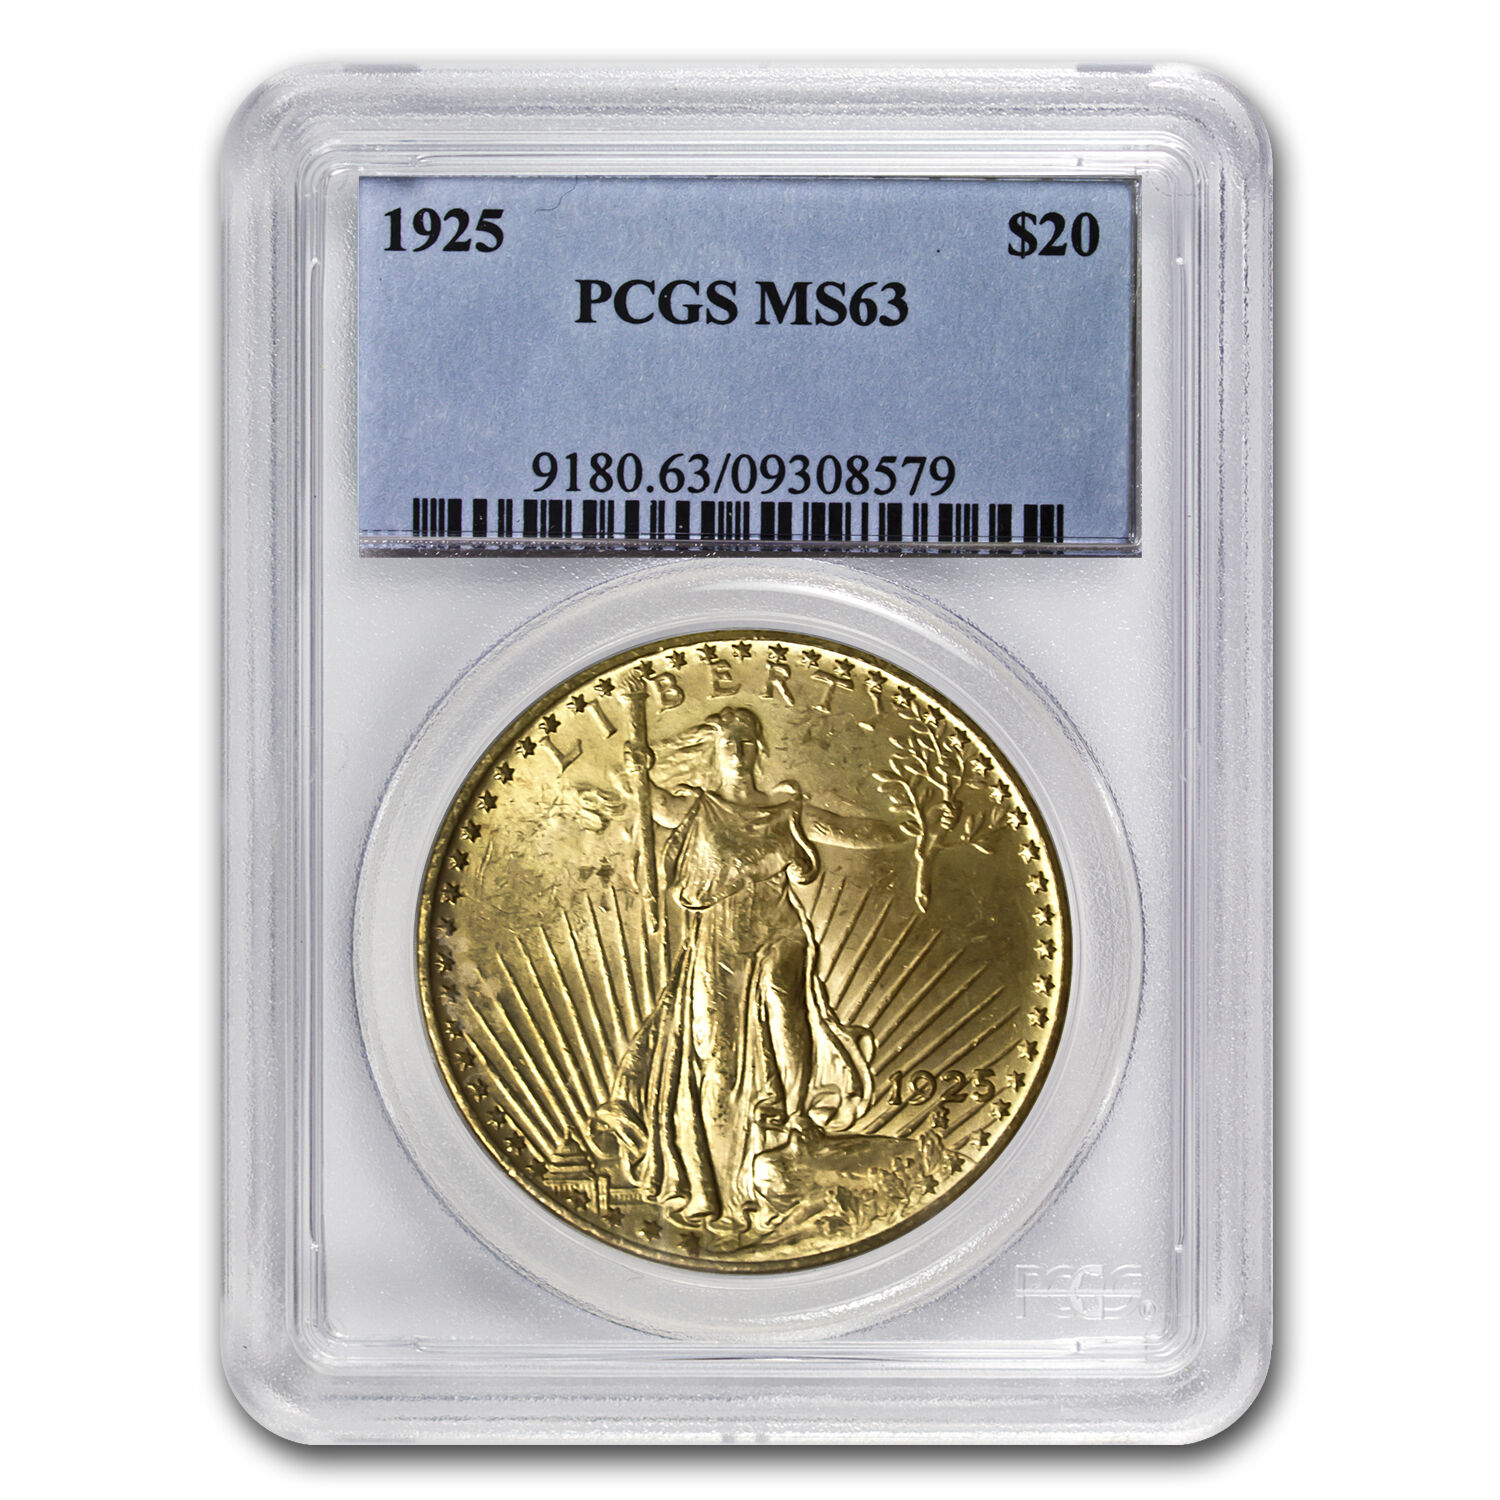 $20 Saint-Gaudens Gold Double Eagle Coin - Random Year - MS-63 PCGS - SKU #7223